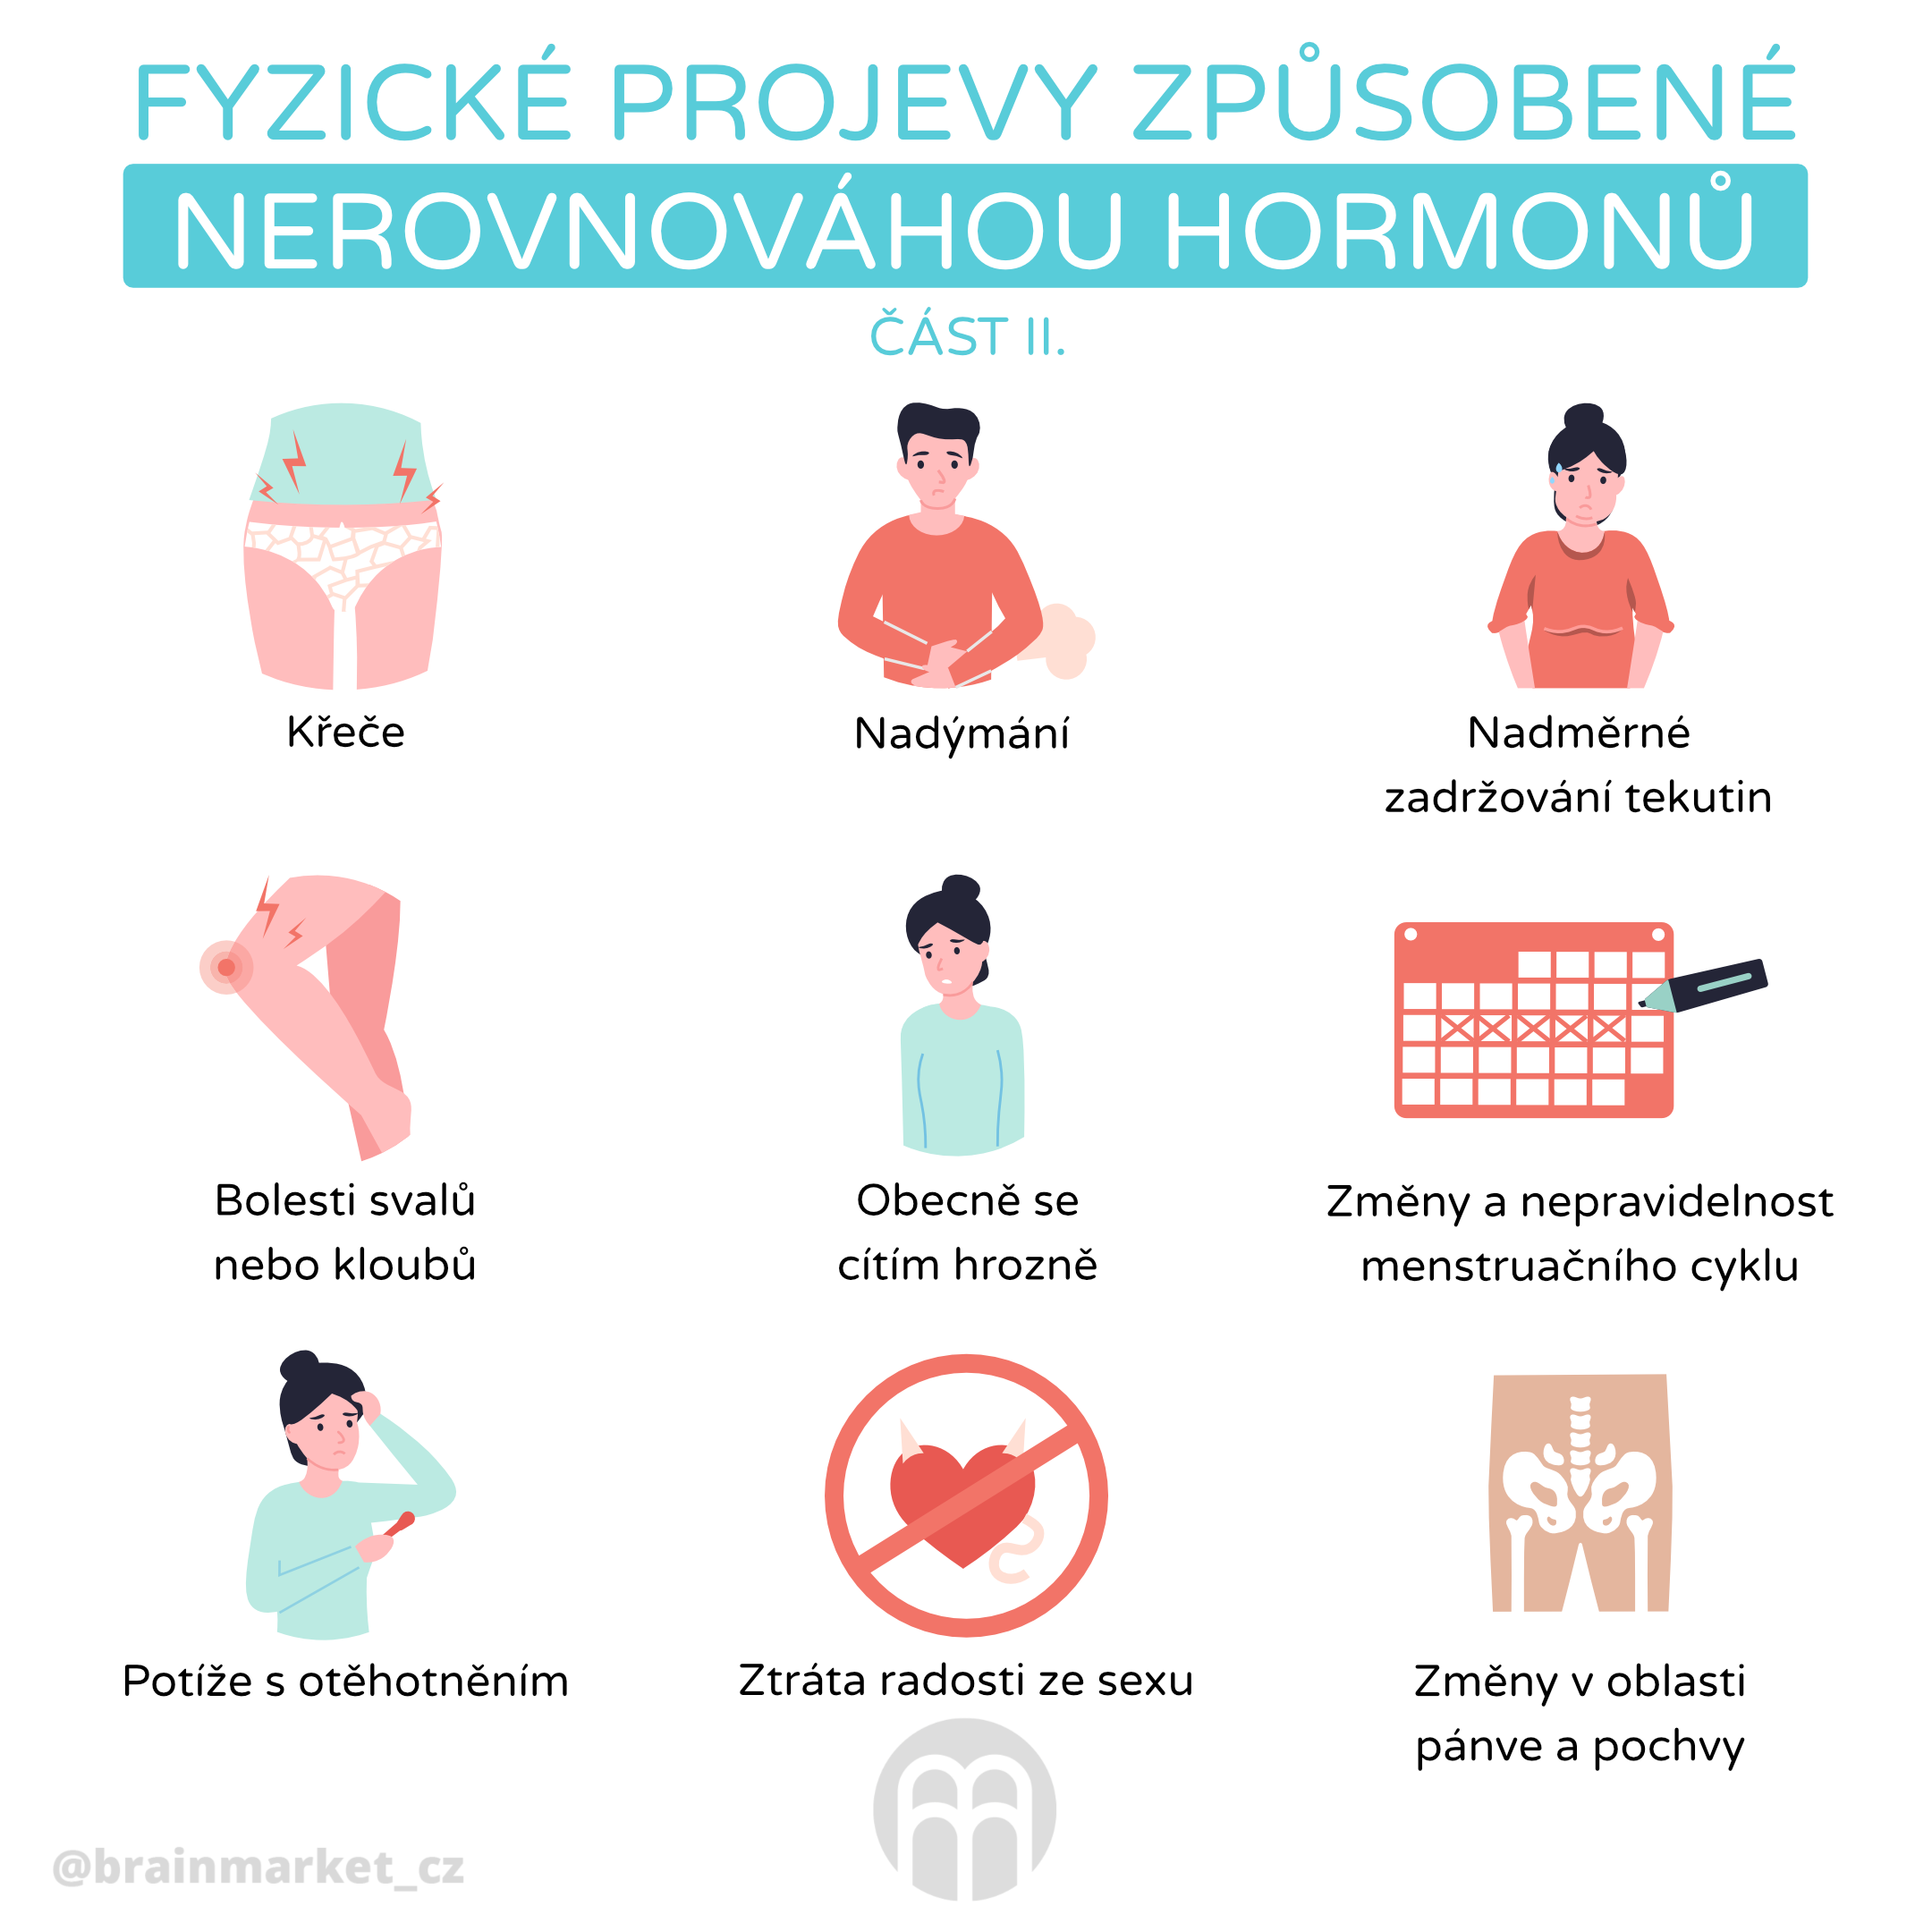 fyzicke projevy nerovnovahy hormonu_cast2_infografika_cz